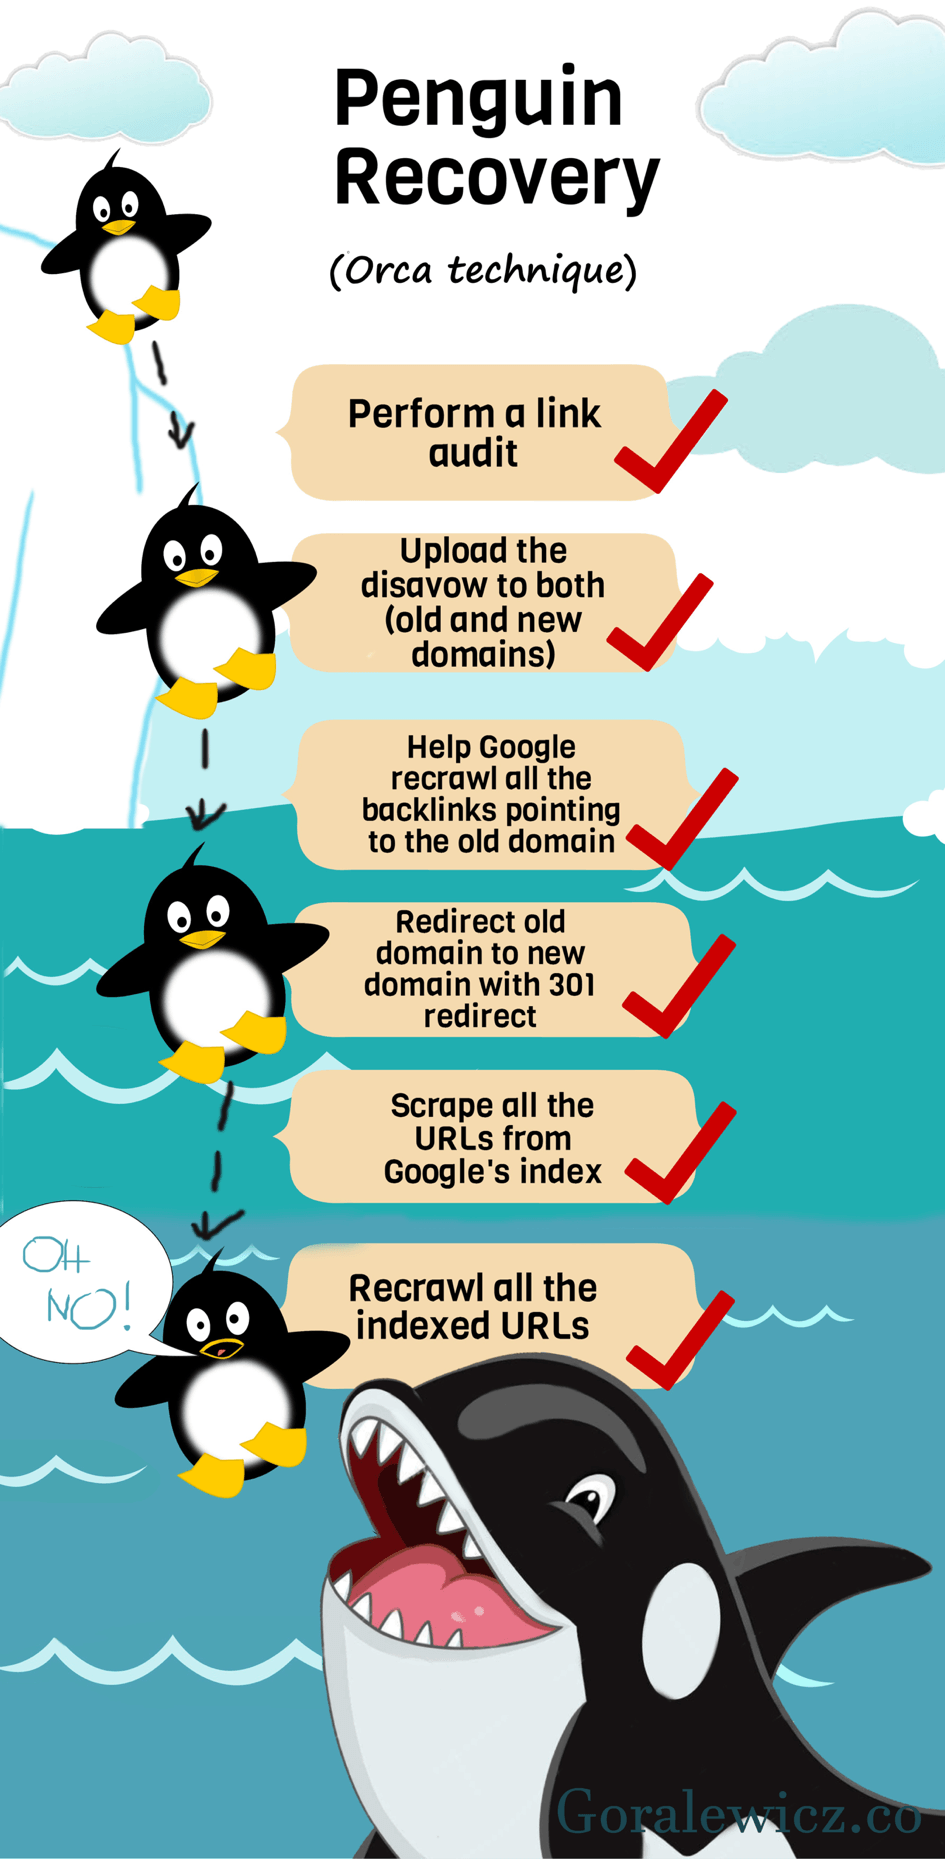 Google Penguin Recovery Method – The Orca Technique